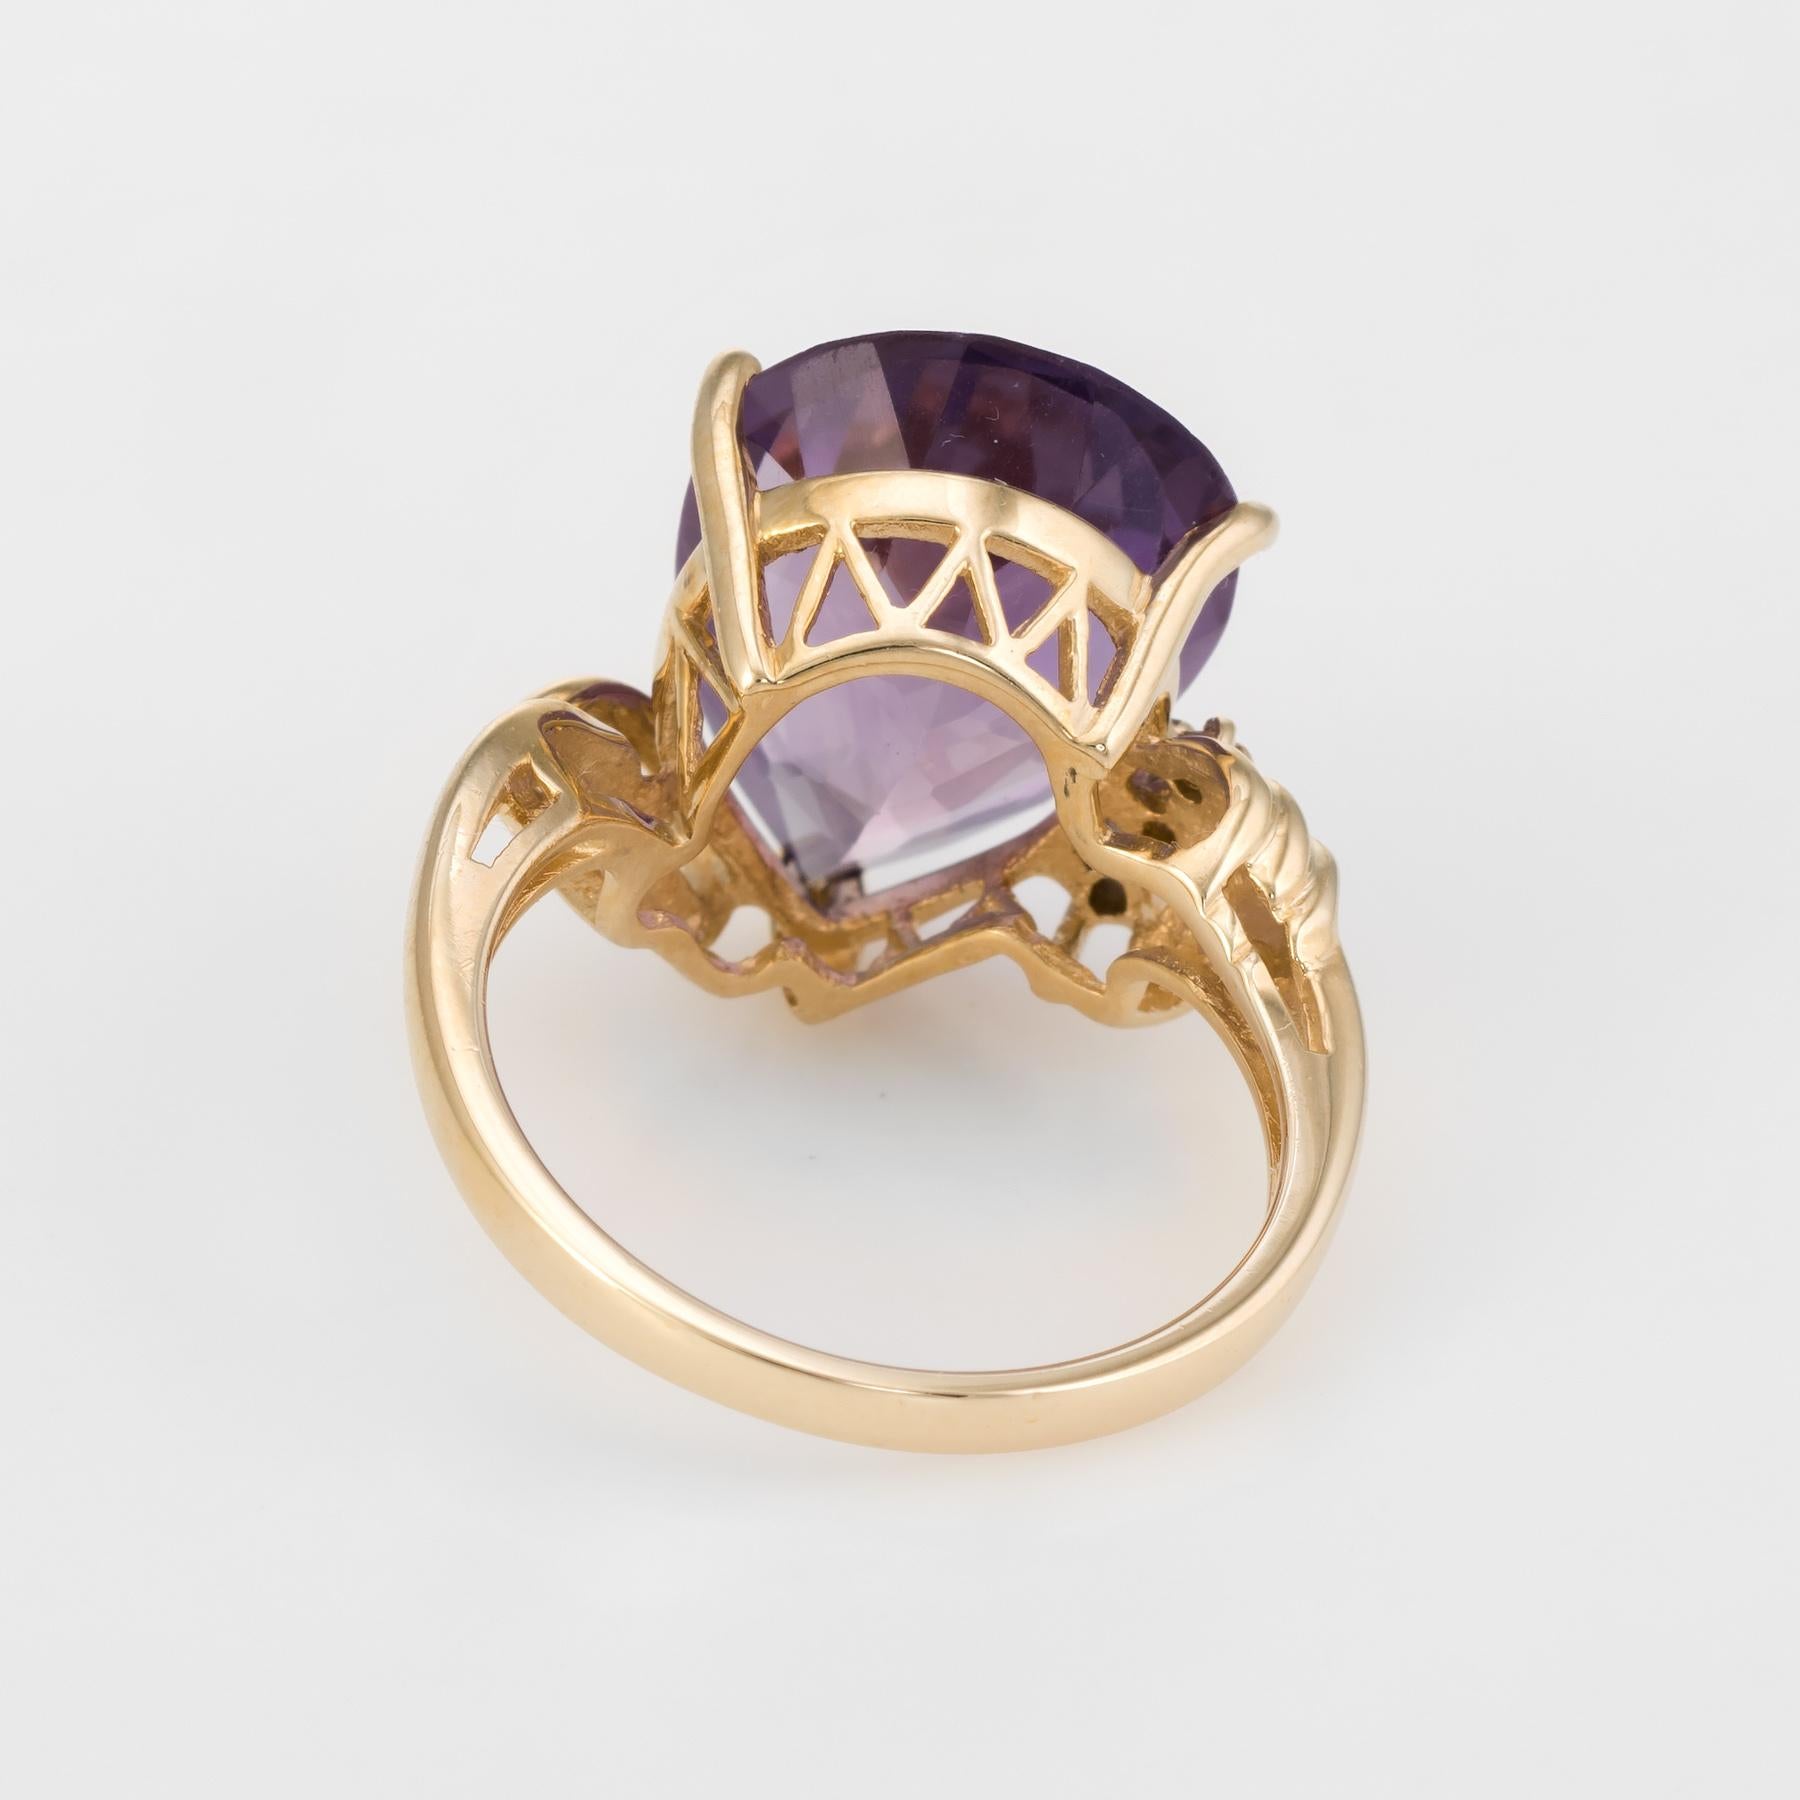 Pear Cut Vintage Amethyst Diamond Ring 10 Karat Gold Pearl Cut Estate Fine Jewelry